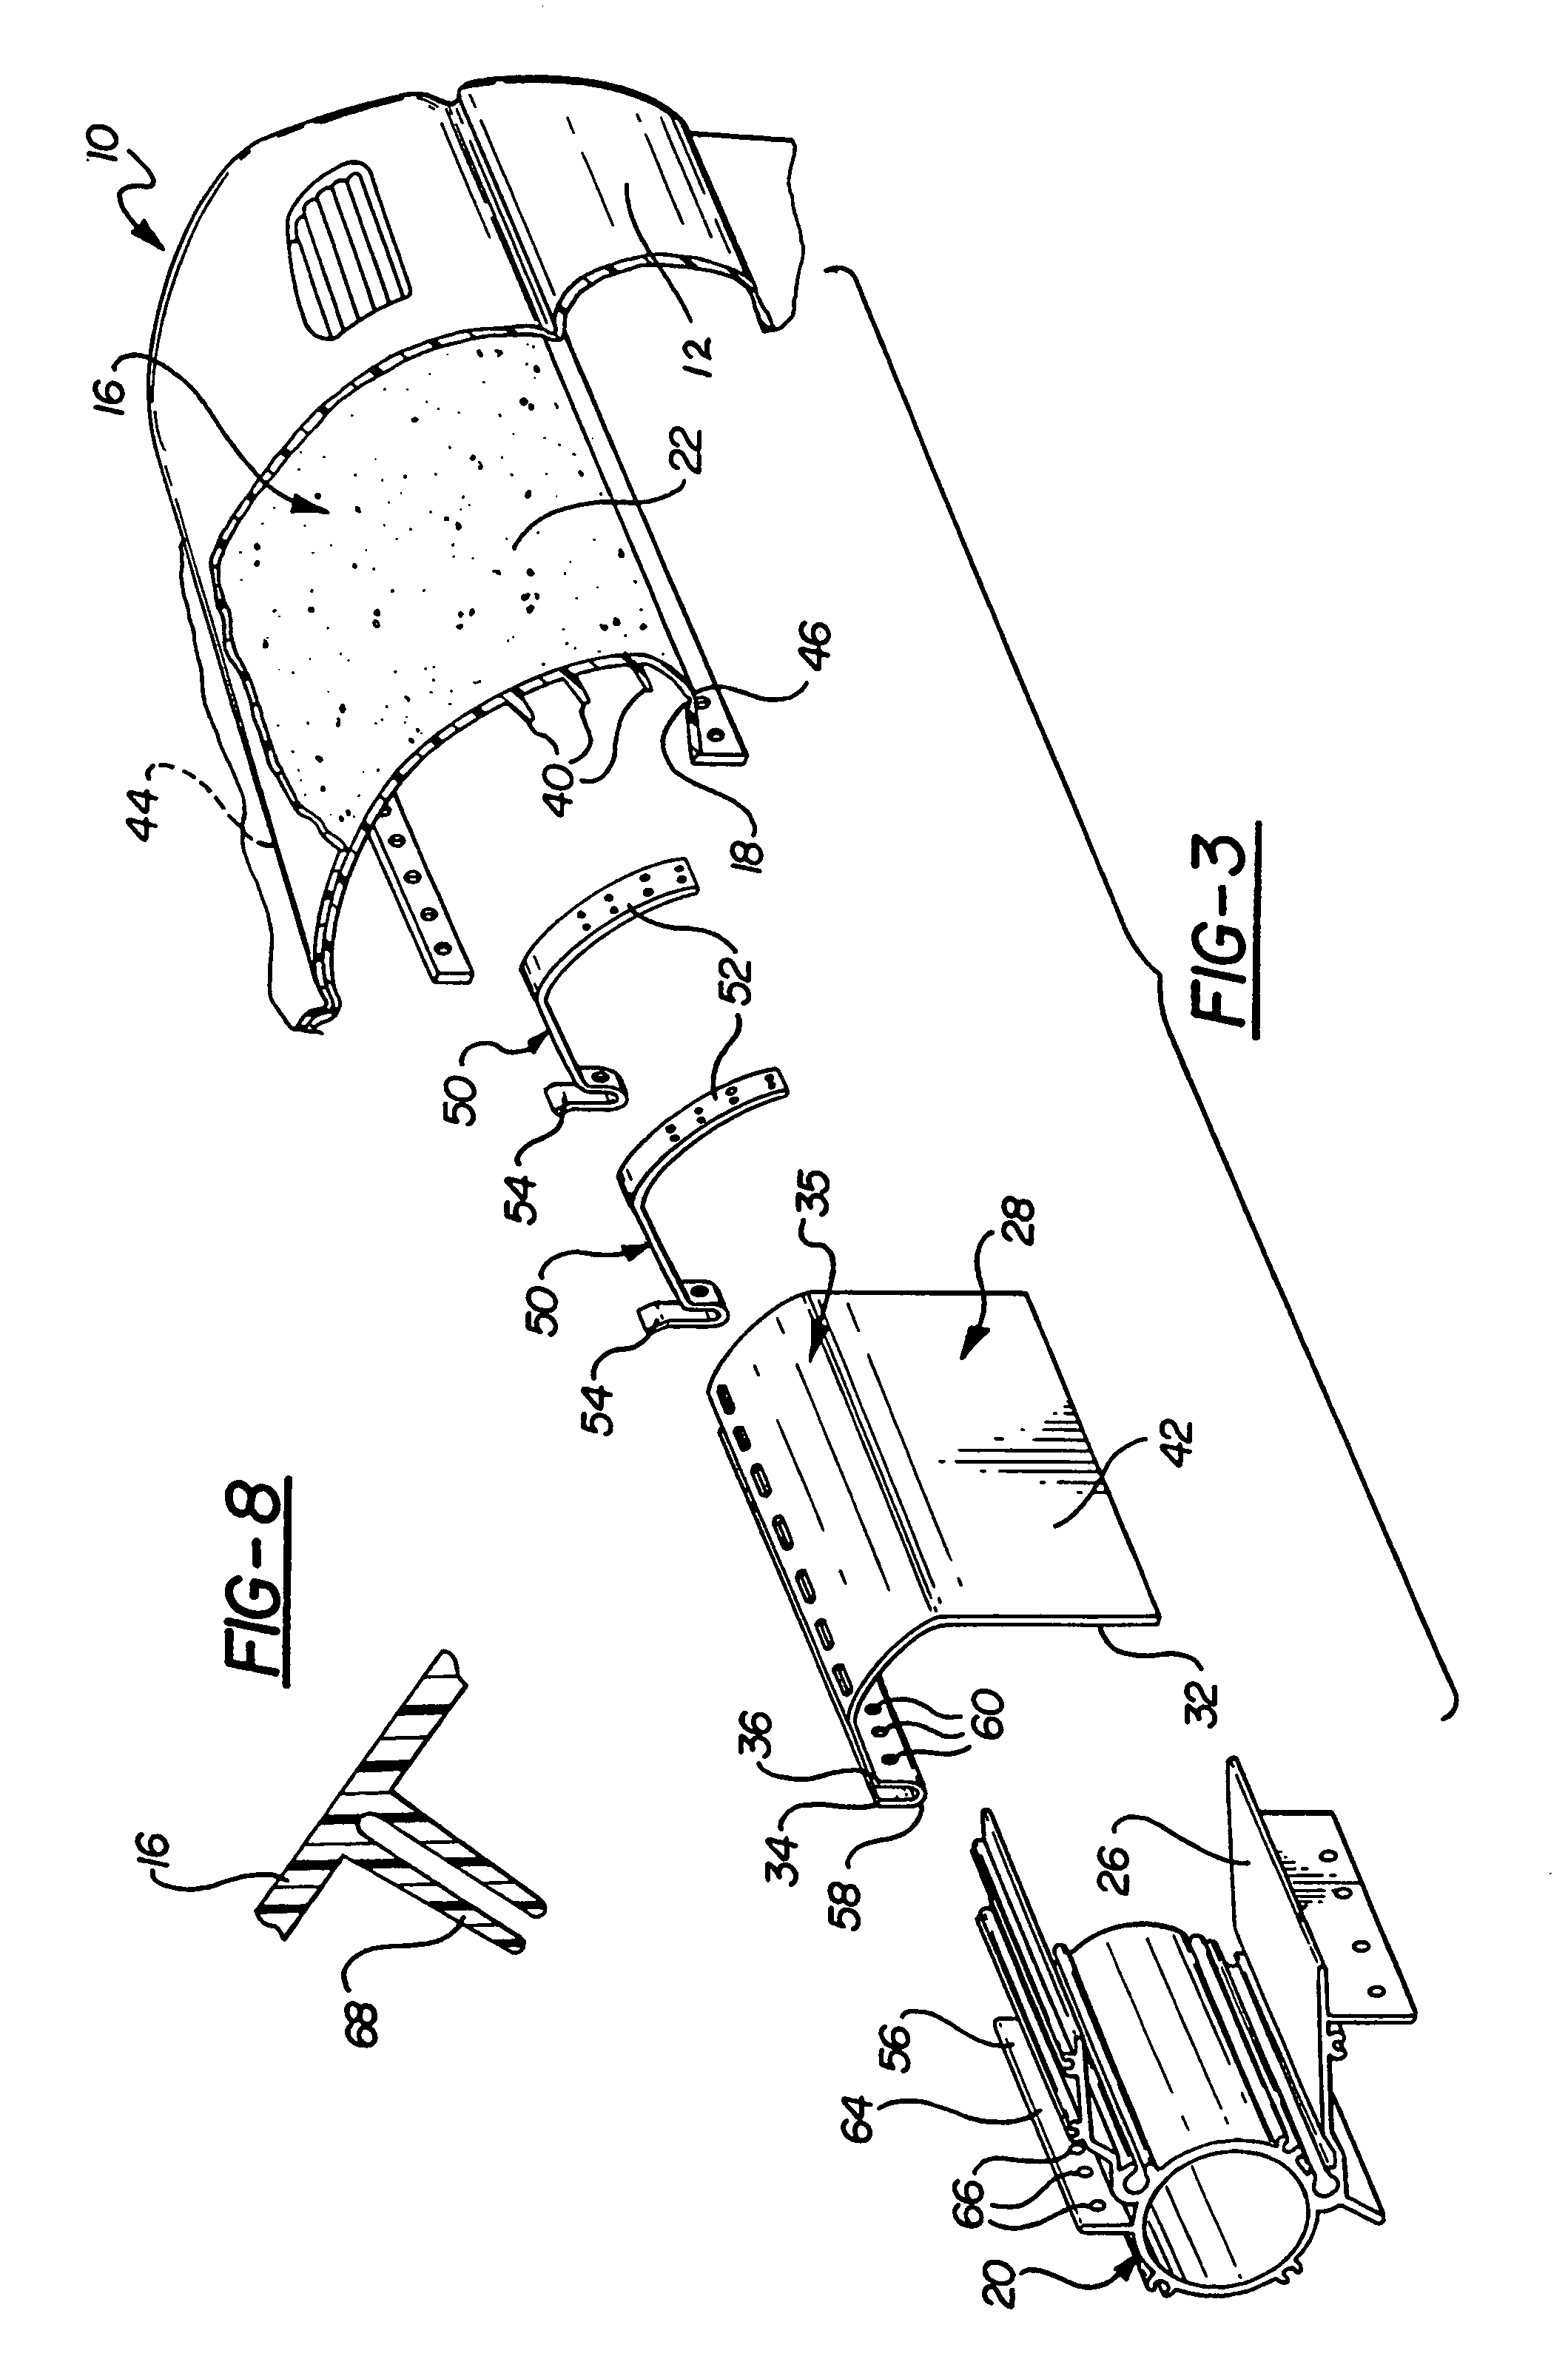 Apparatus for deploying an air bag through a hard panel